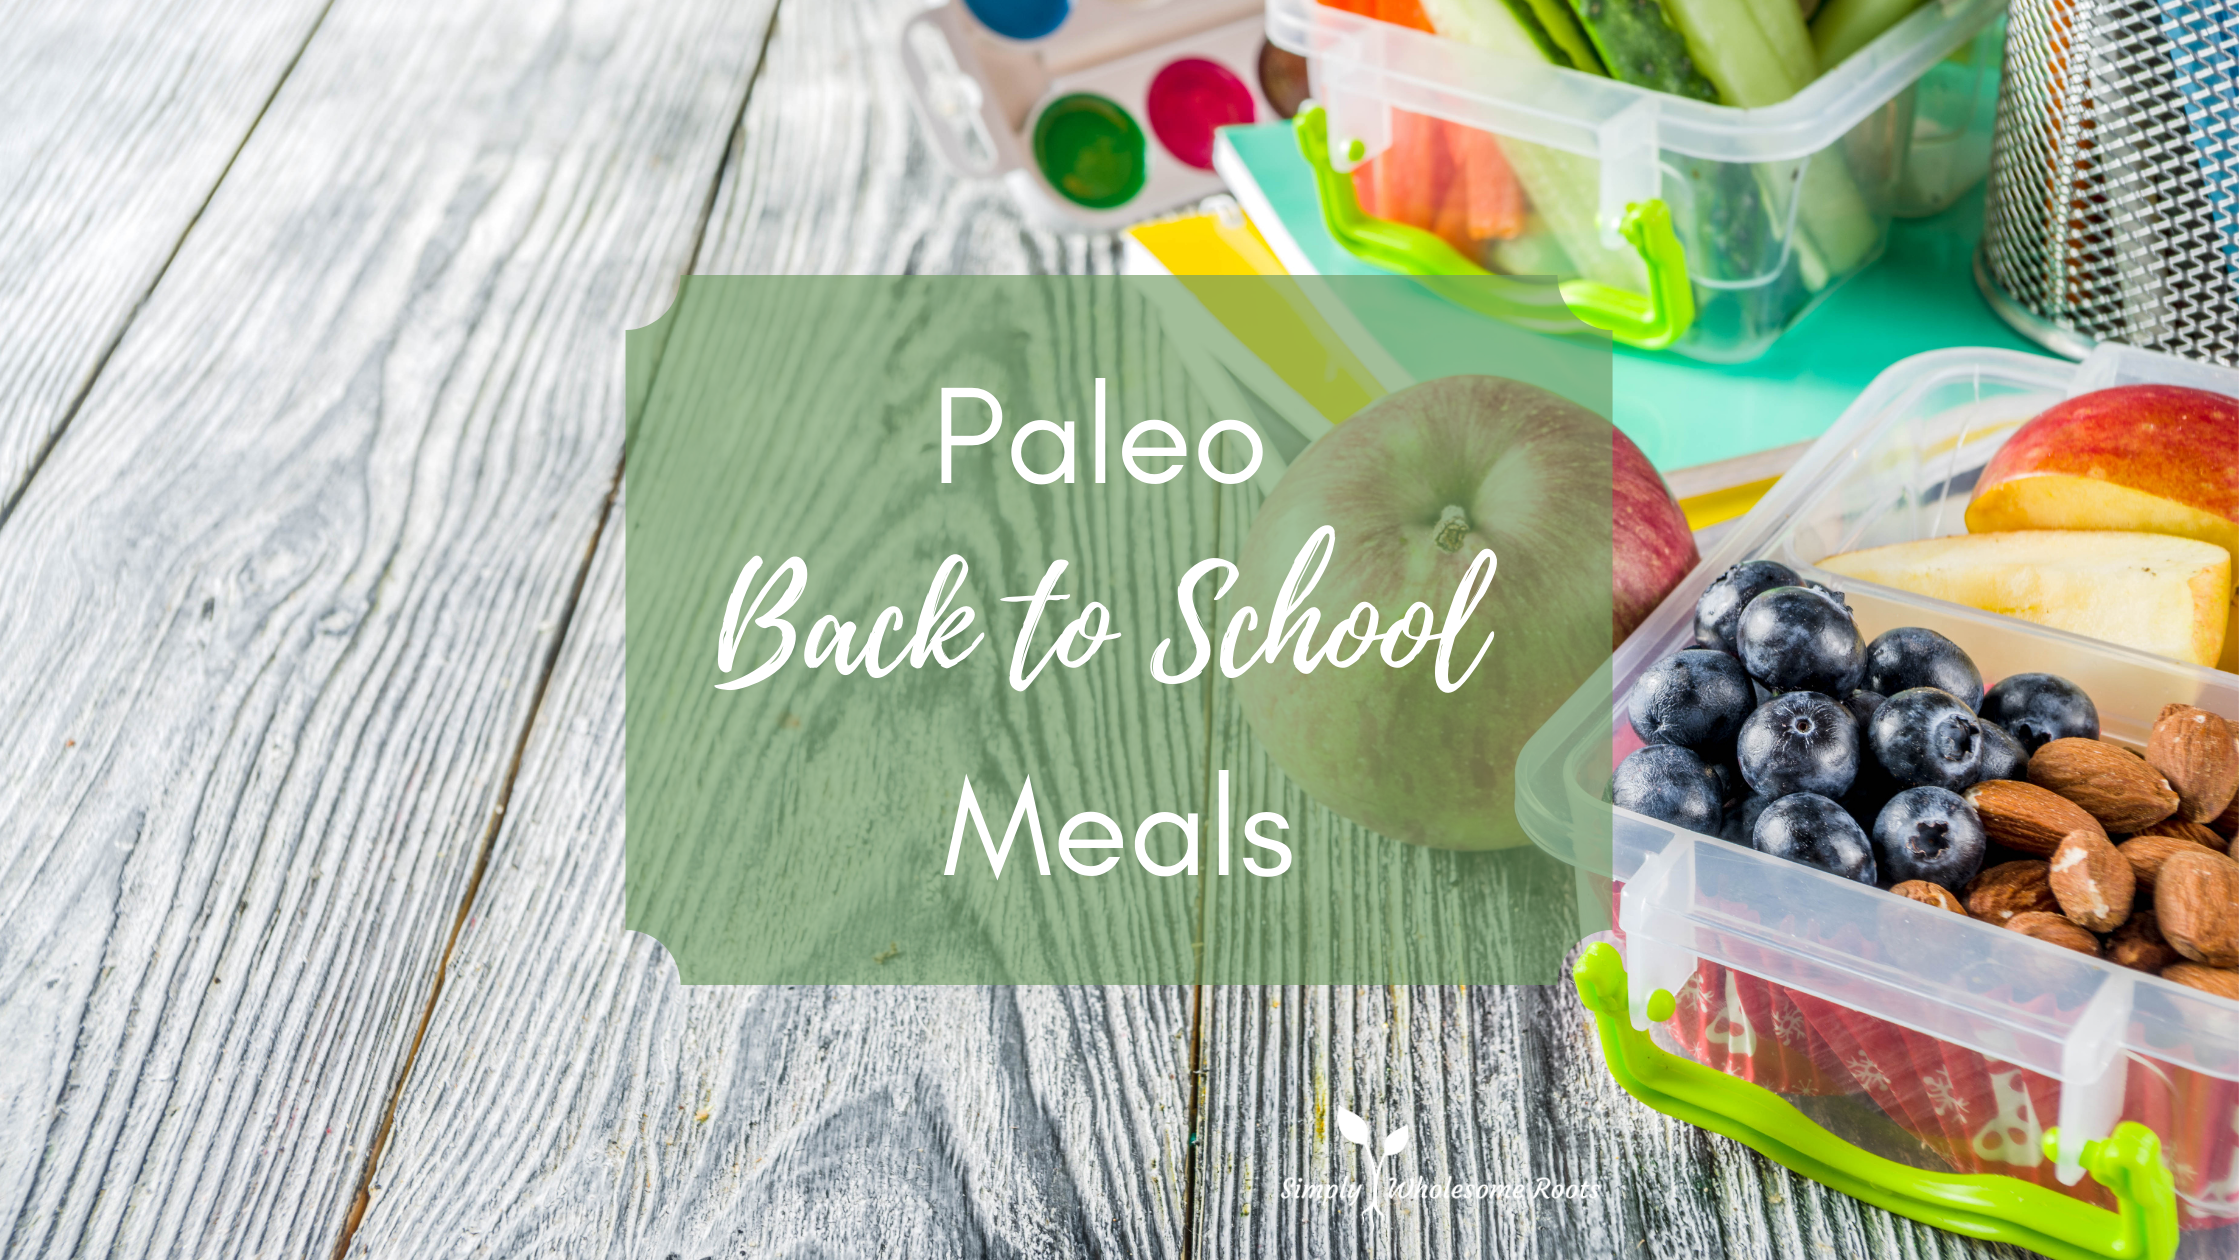 Paleo Back to school meals